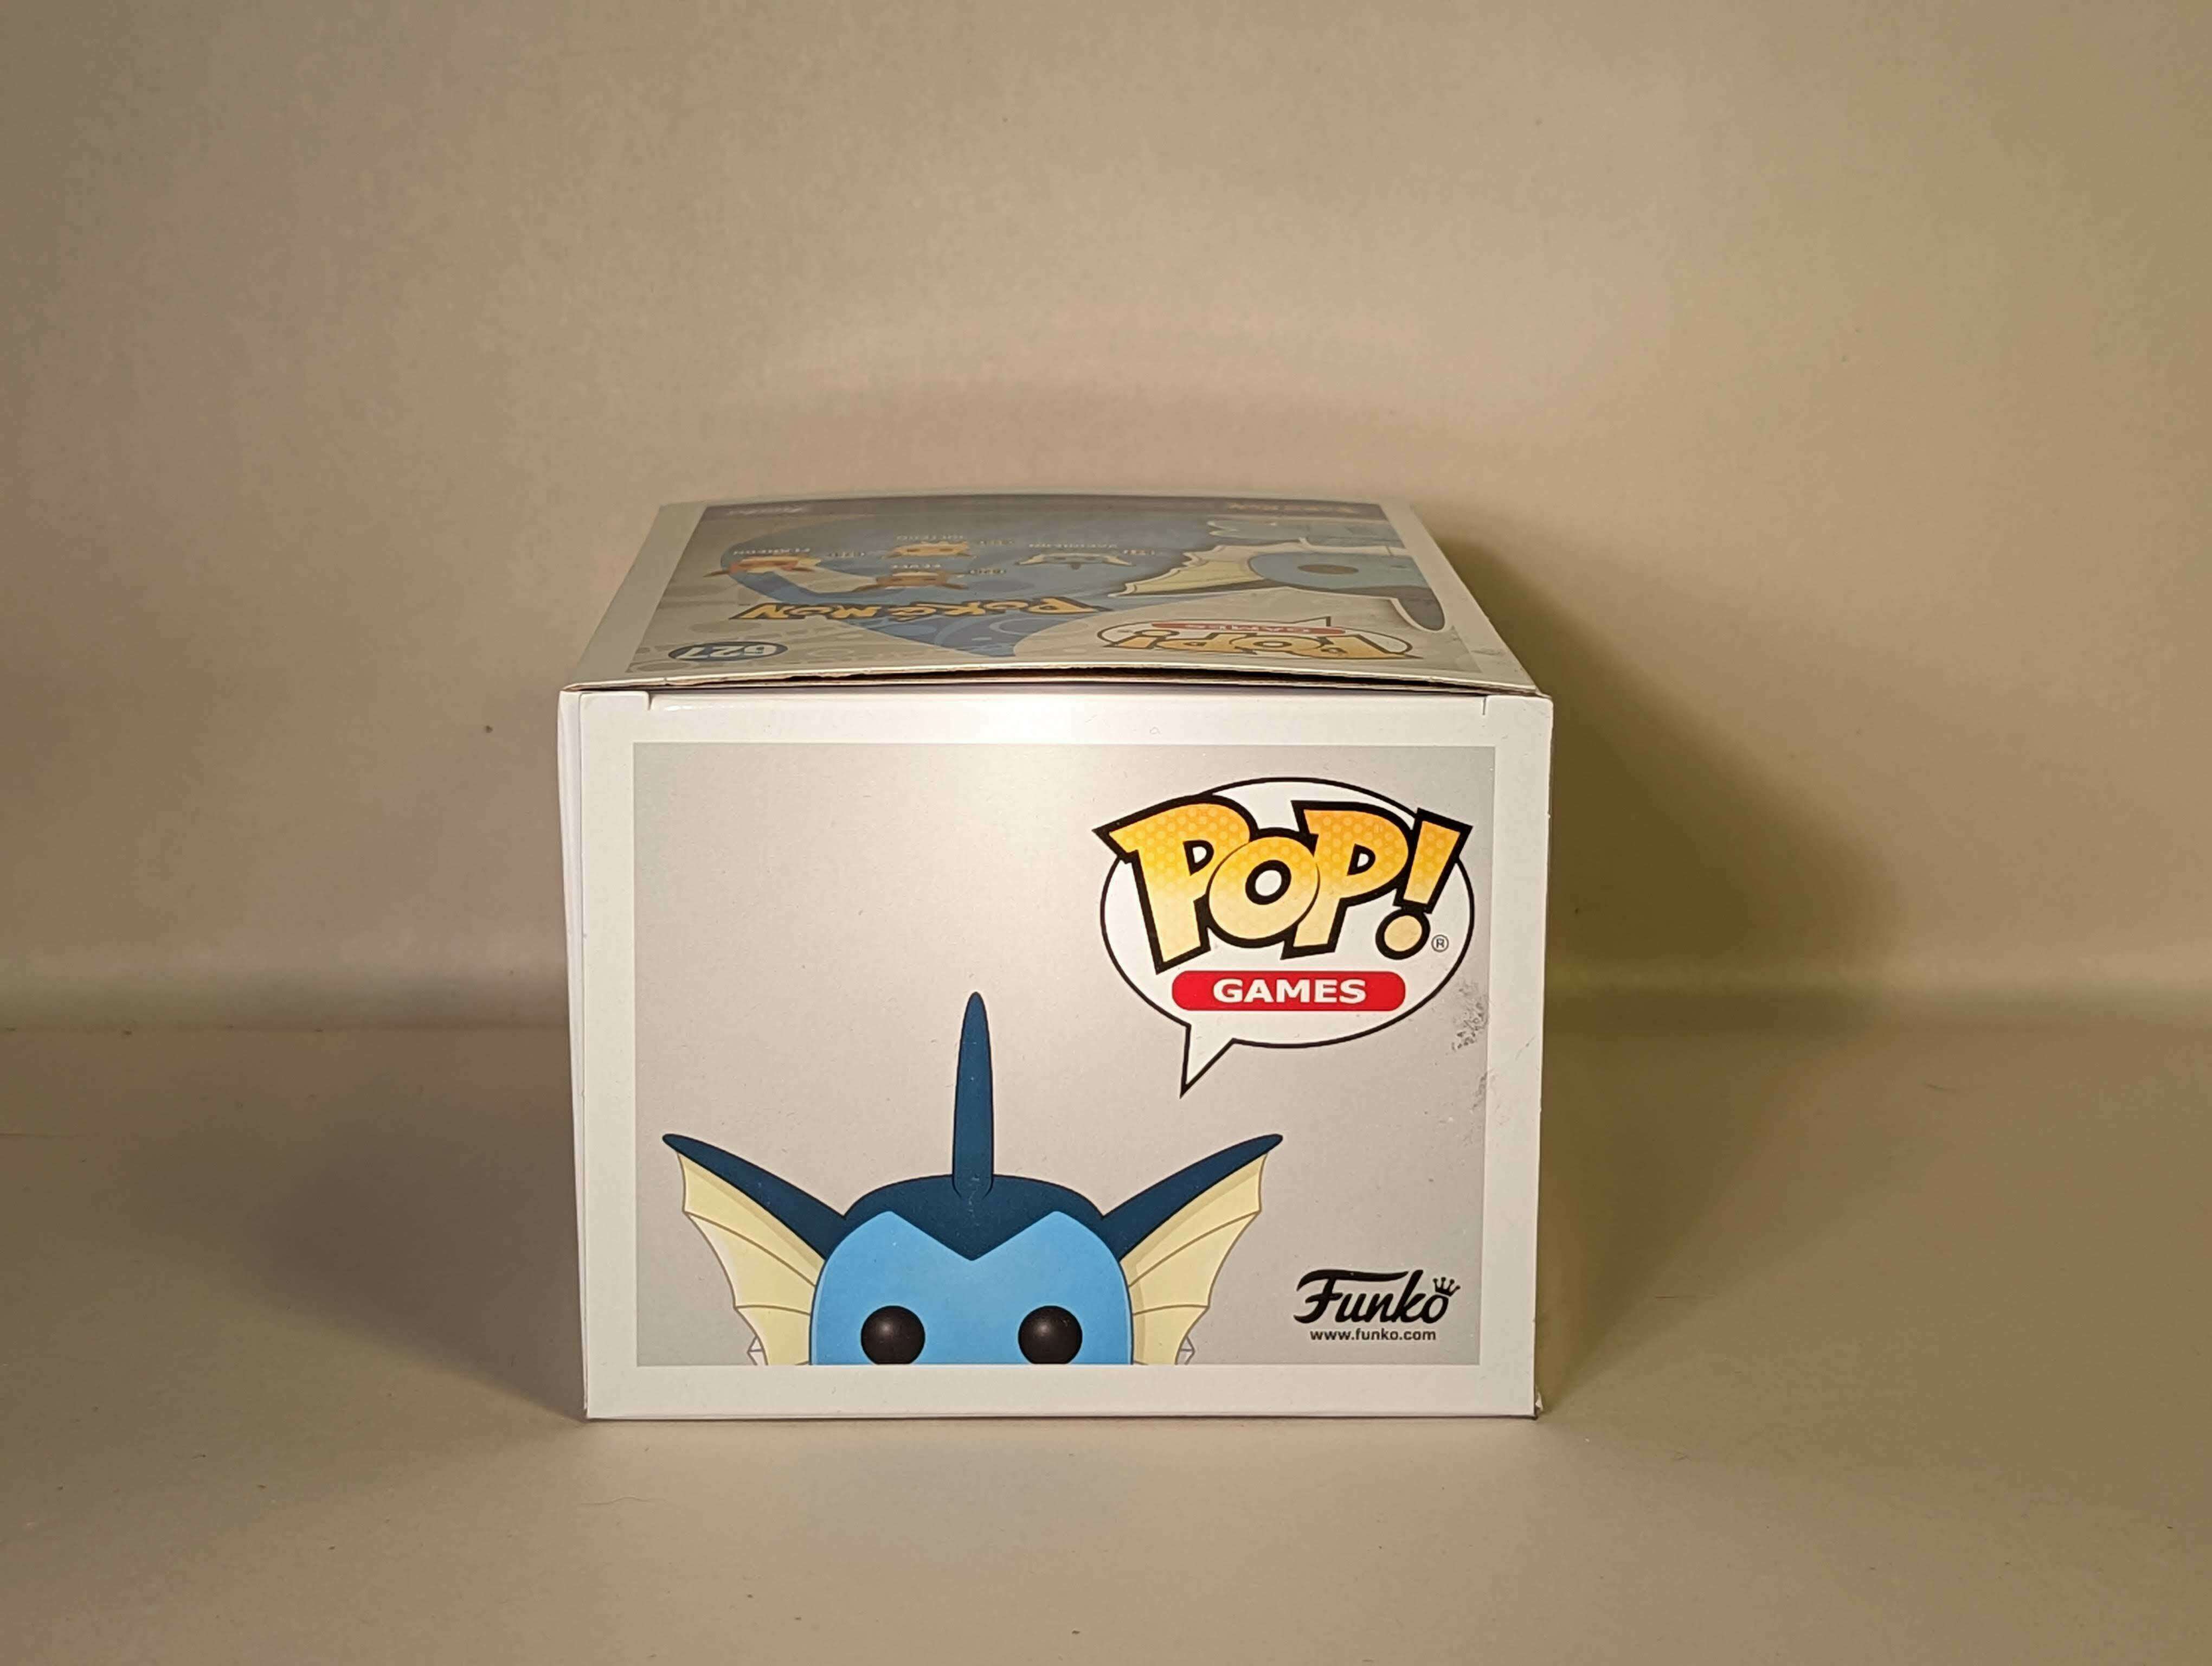 Pop Funko Vaporeon 627 Pokémon